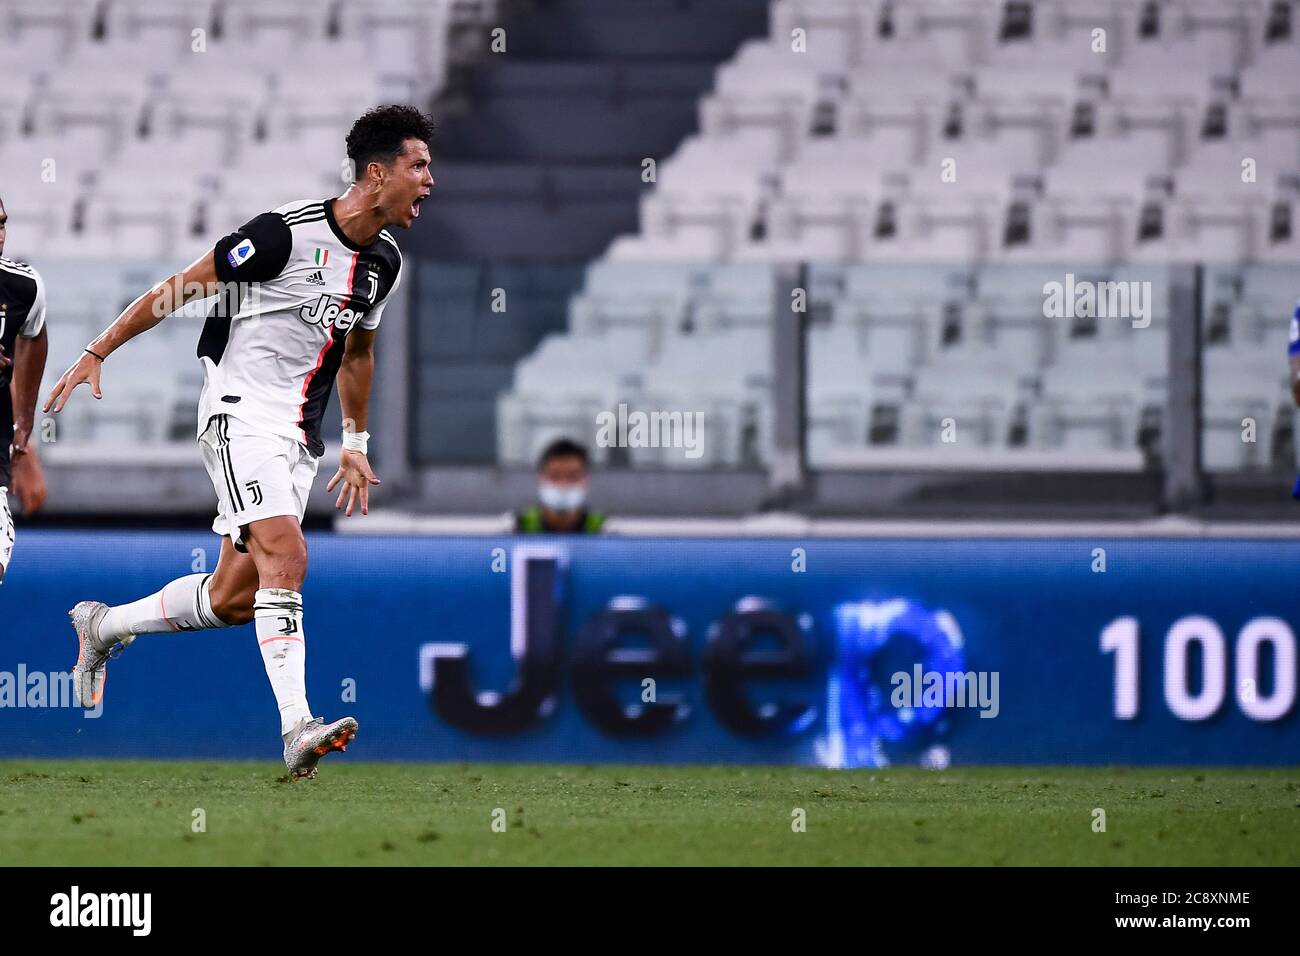 All about Cristiano Ronaldo dos Santos Aveiro — Match winning goal